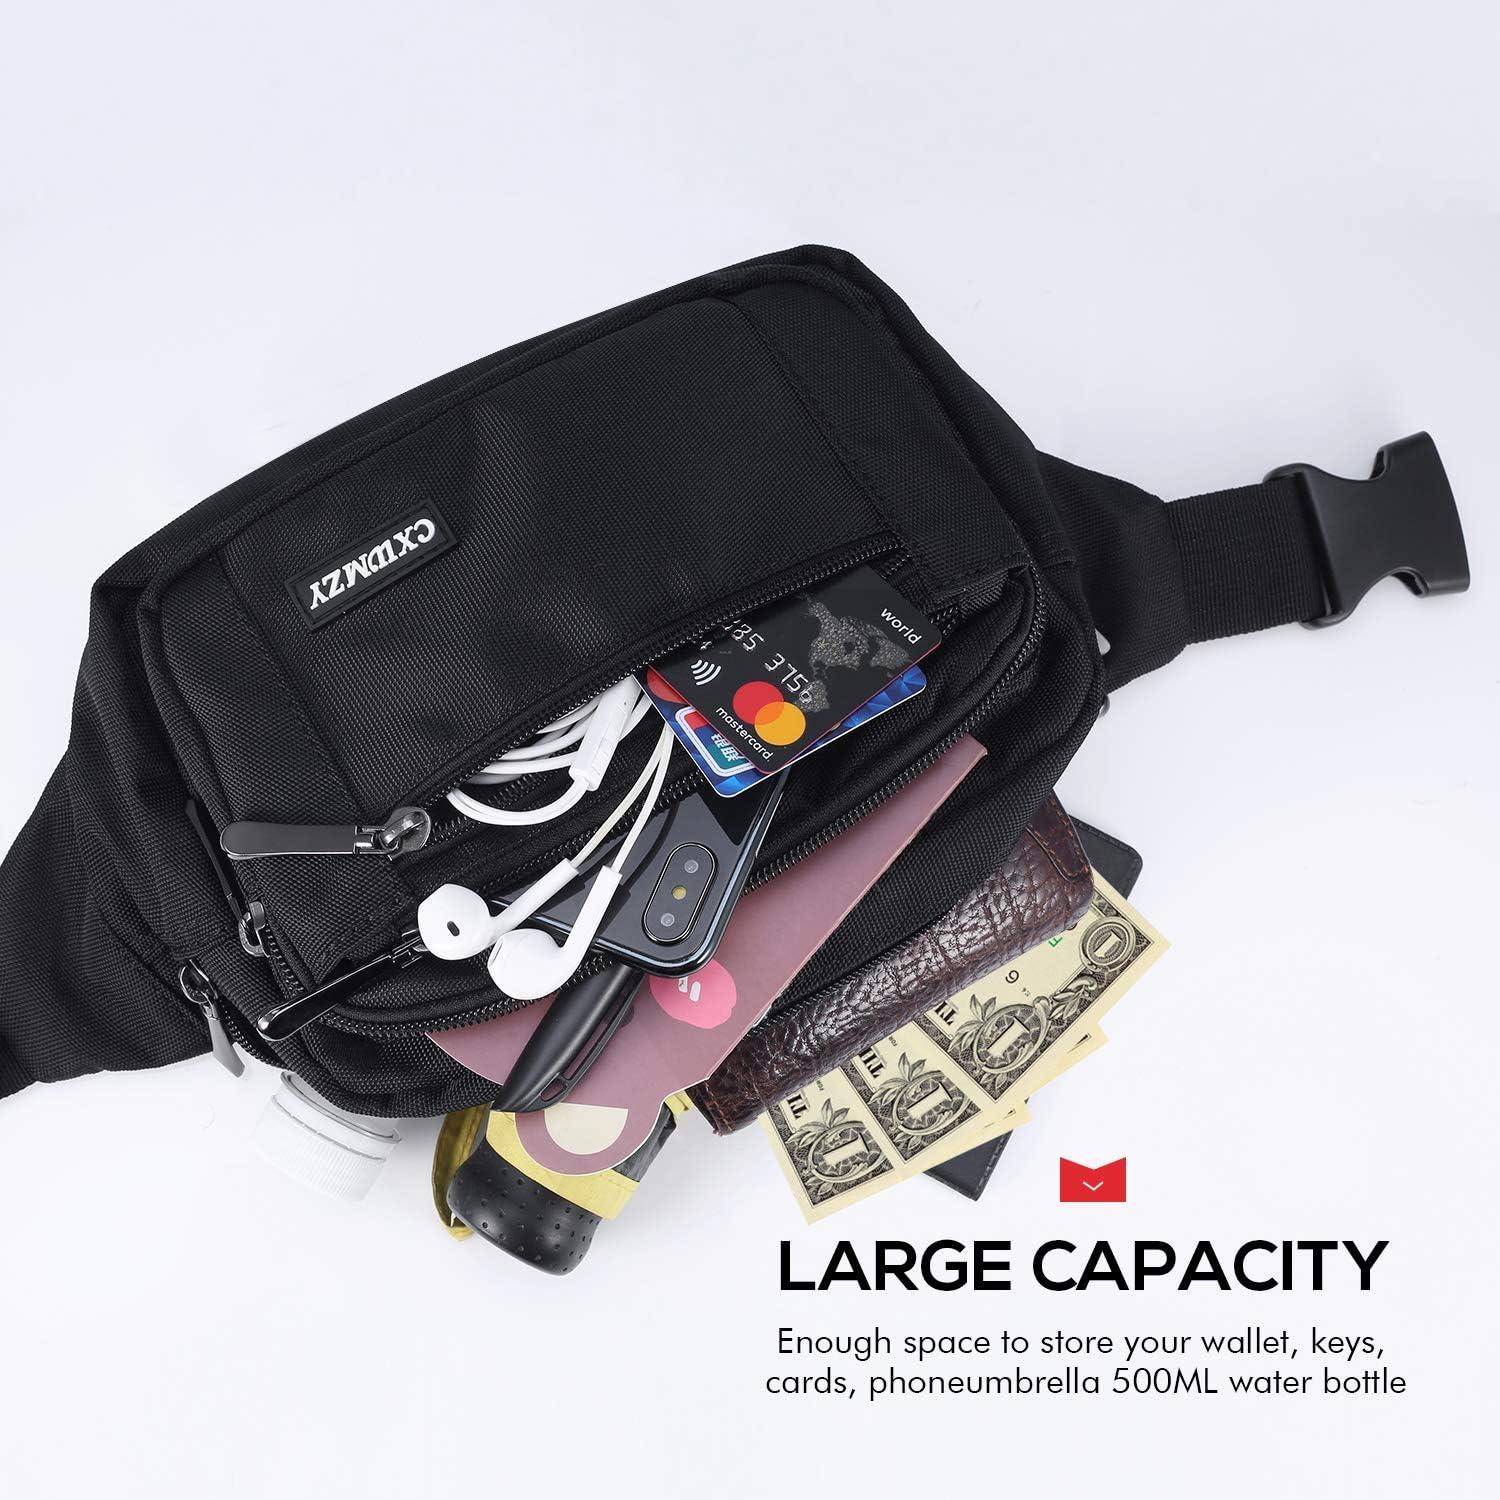 CXWMZY Fashion Fanny Packs for Women & Men, Girls Boys Teens Waist Bag Hip  Bum Bag Cute Fanny Pack Casual Bum Bag with Multi-Pockets Adjustable Belts